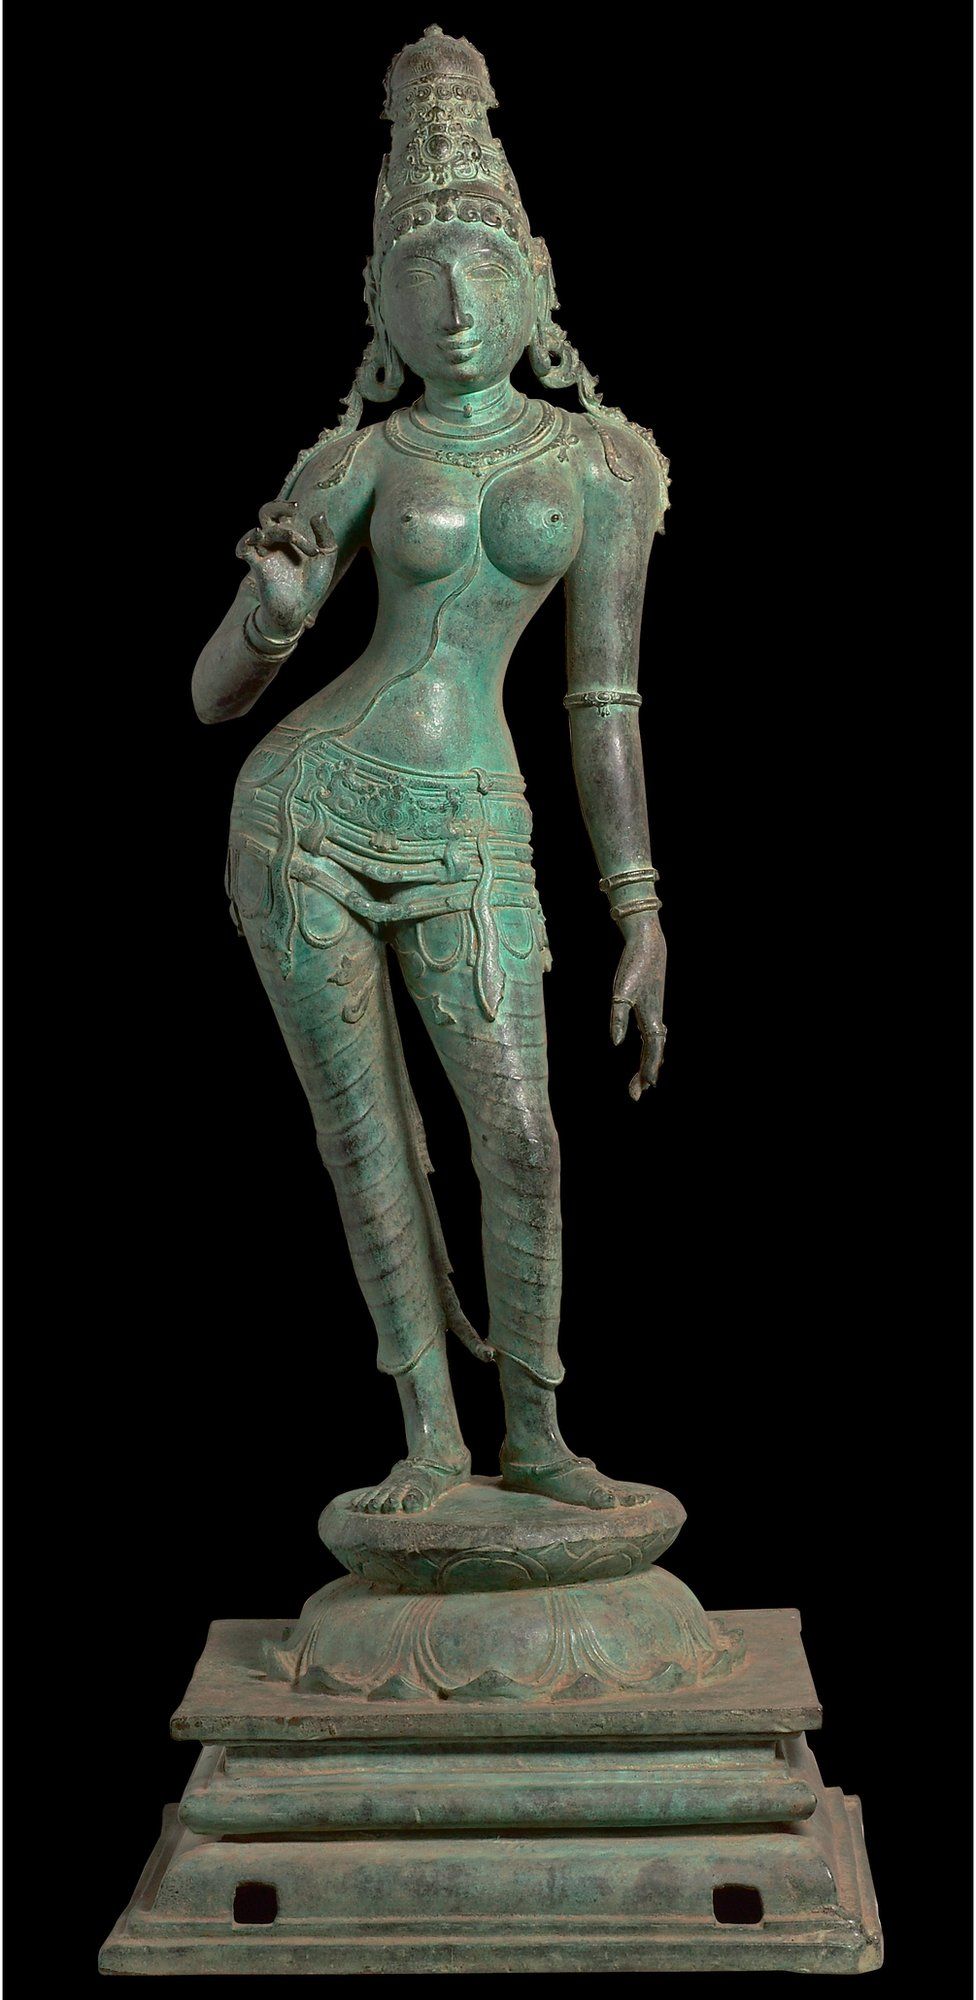 Picture of the 11th Century statue of Hindu goddess Uma Parameshvari